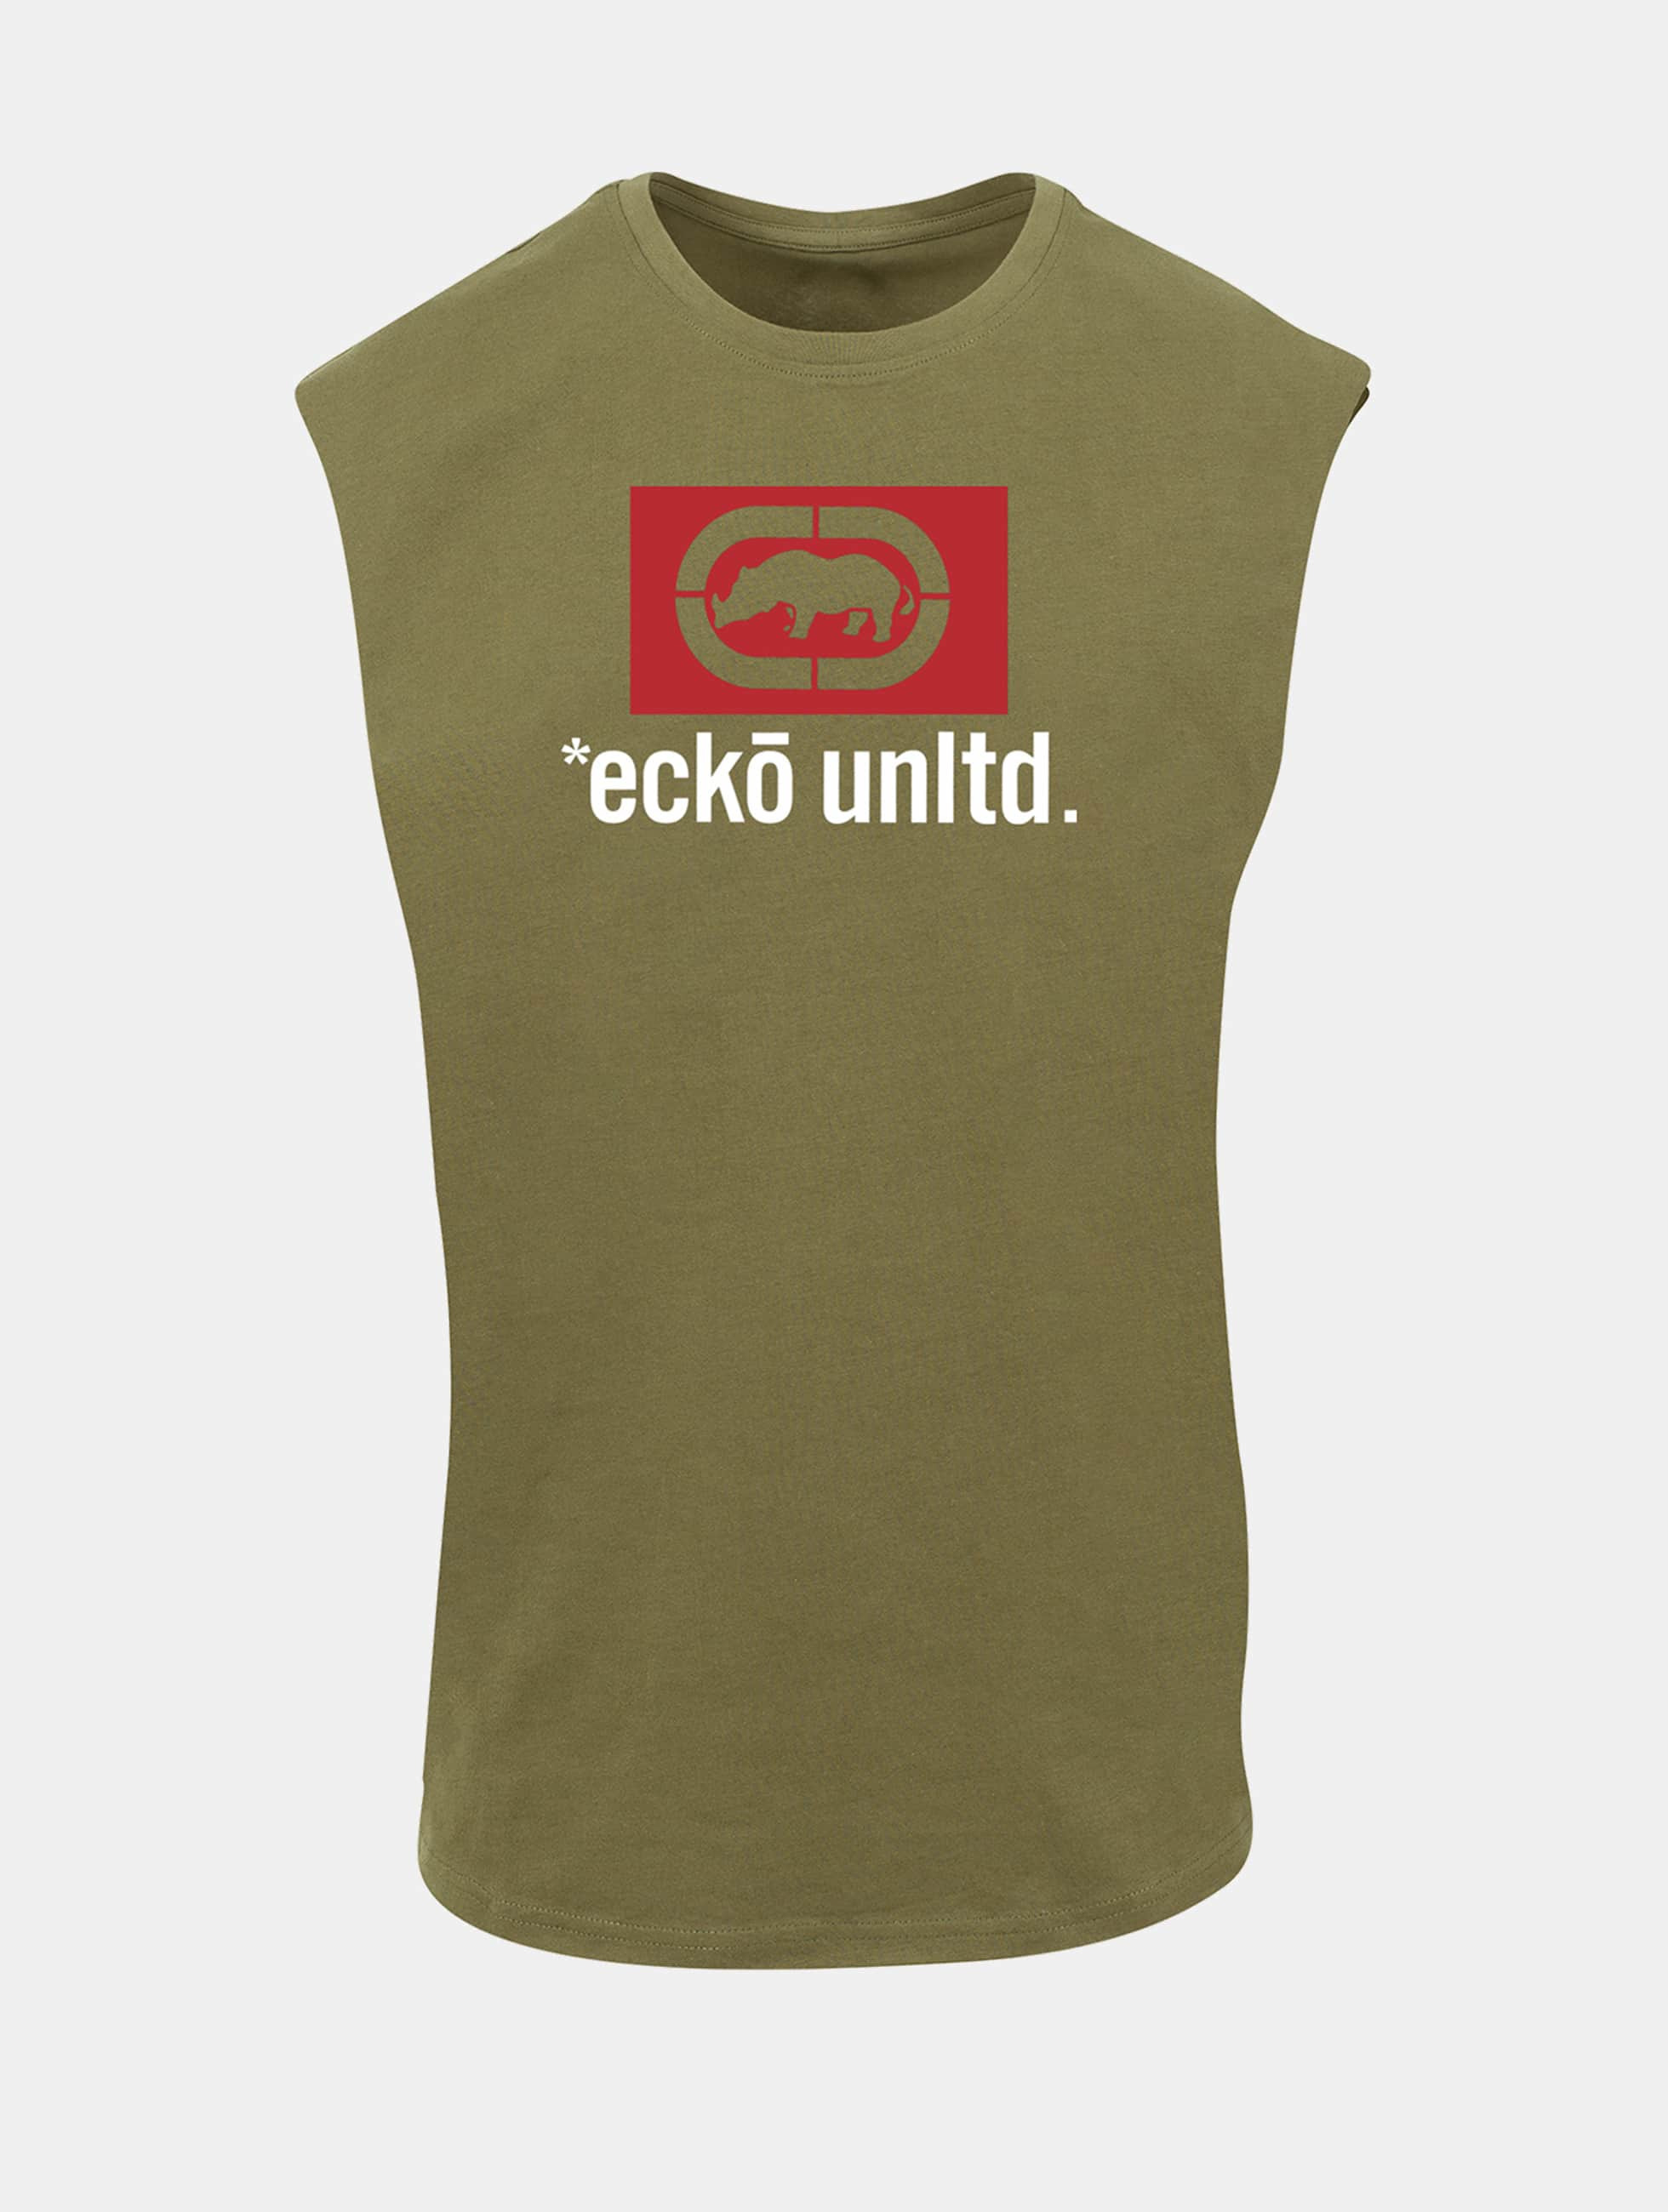 Men's tank top Ecko Unltd. MBOX - olive